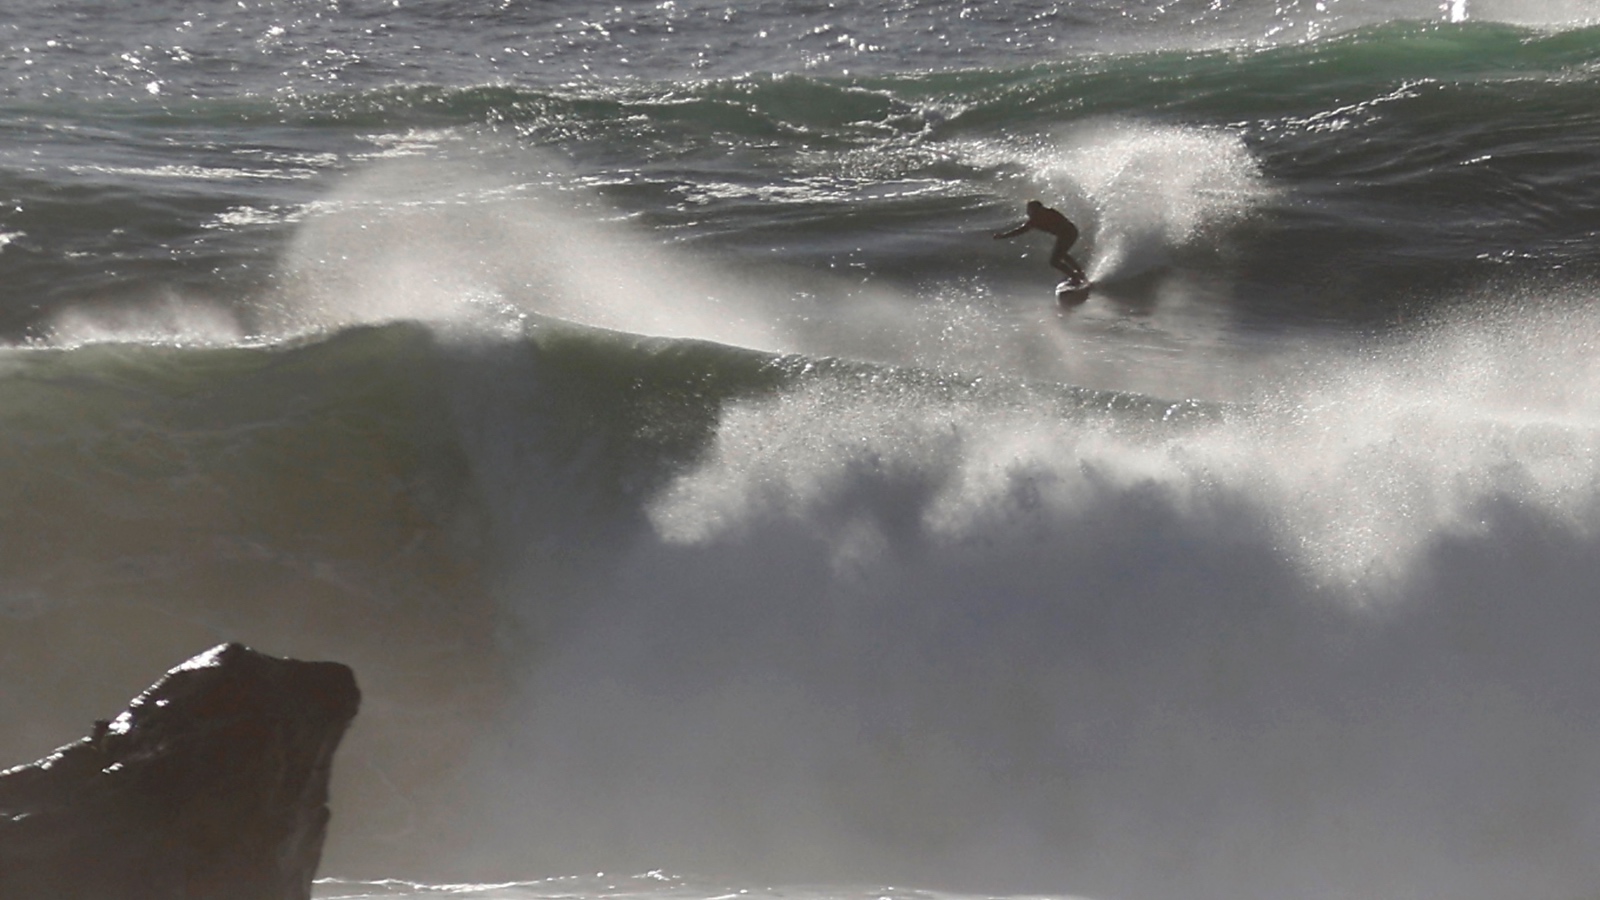 Mavericks surfing Half Moon Bay biggest waves from December swell